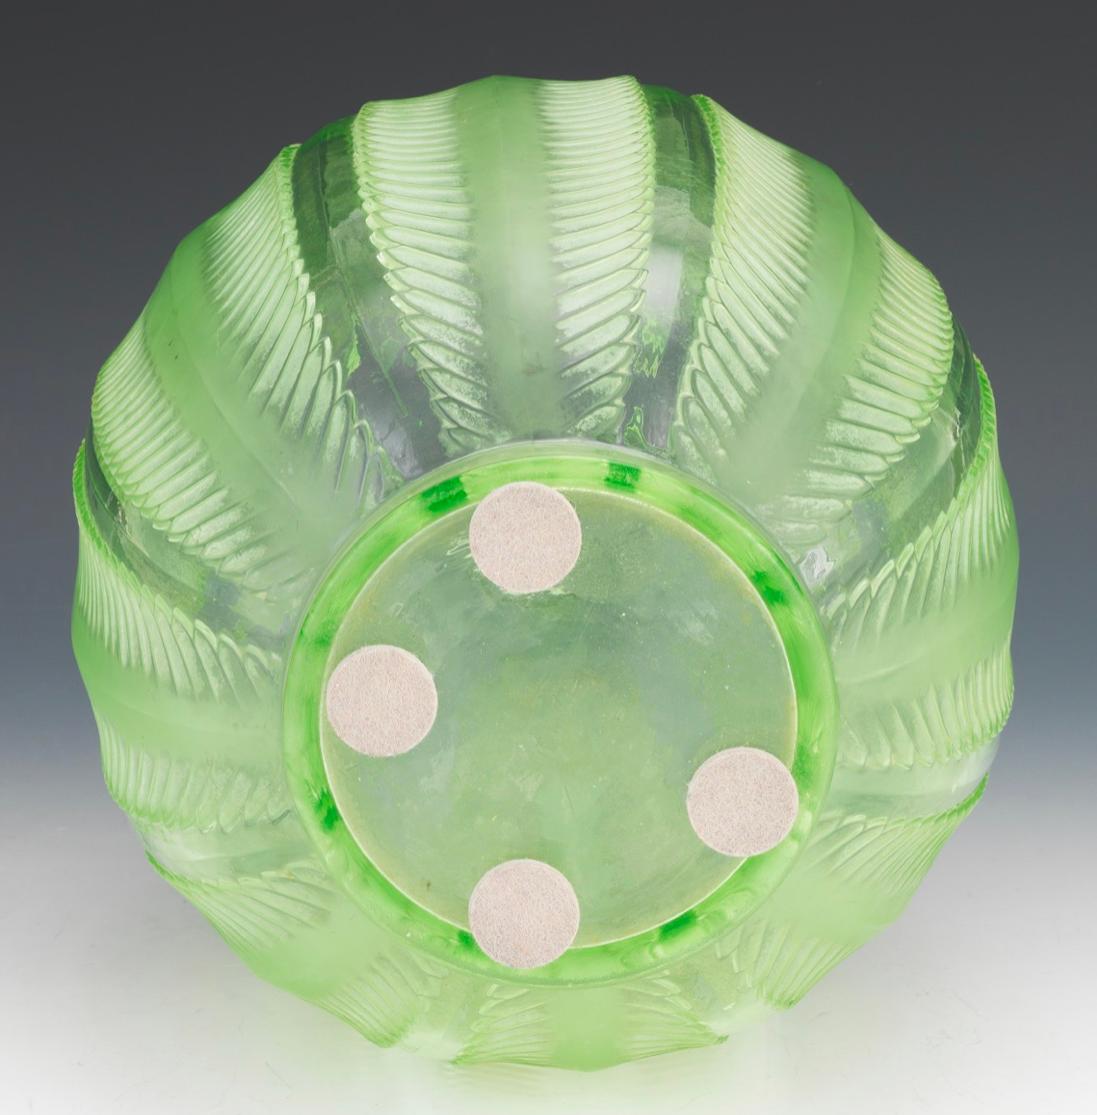 French 1932 René Lalique Biskra Vase in Lime Green Glass